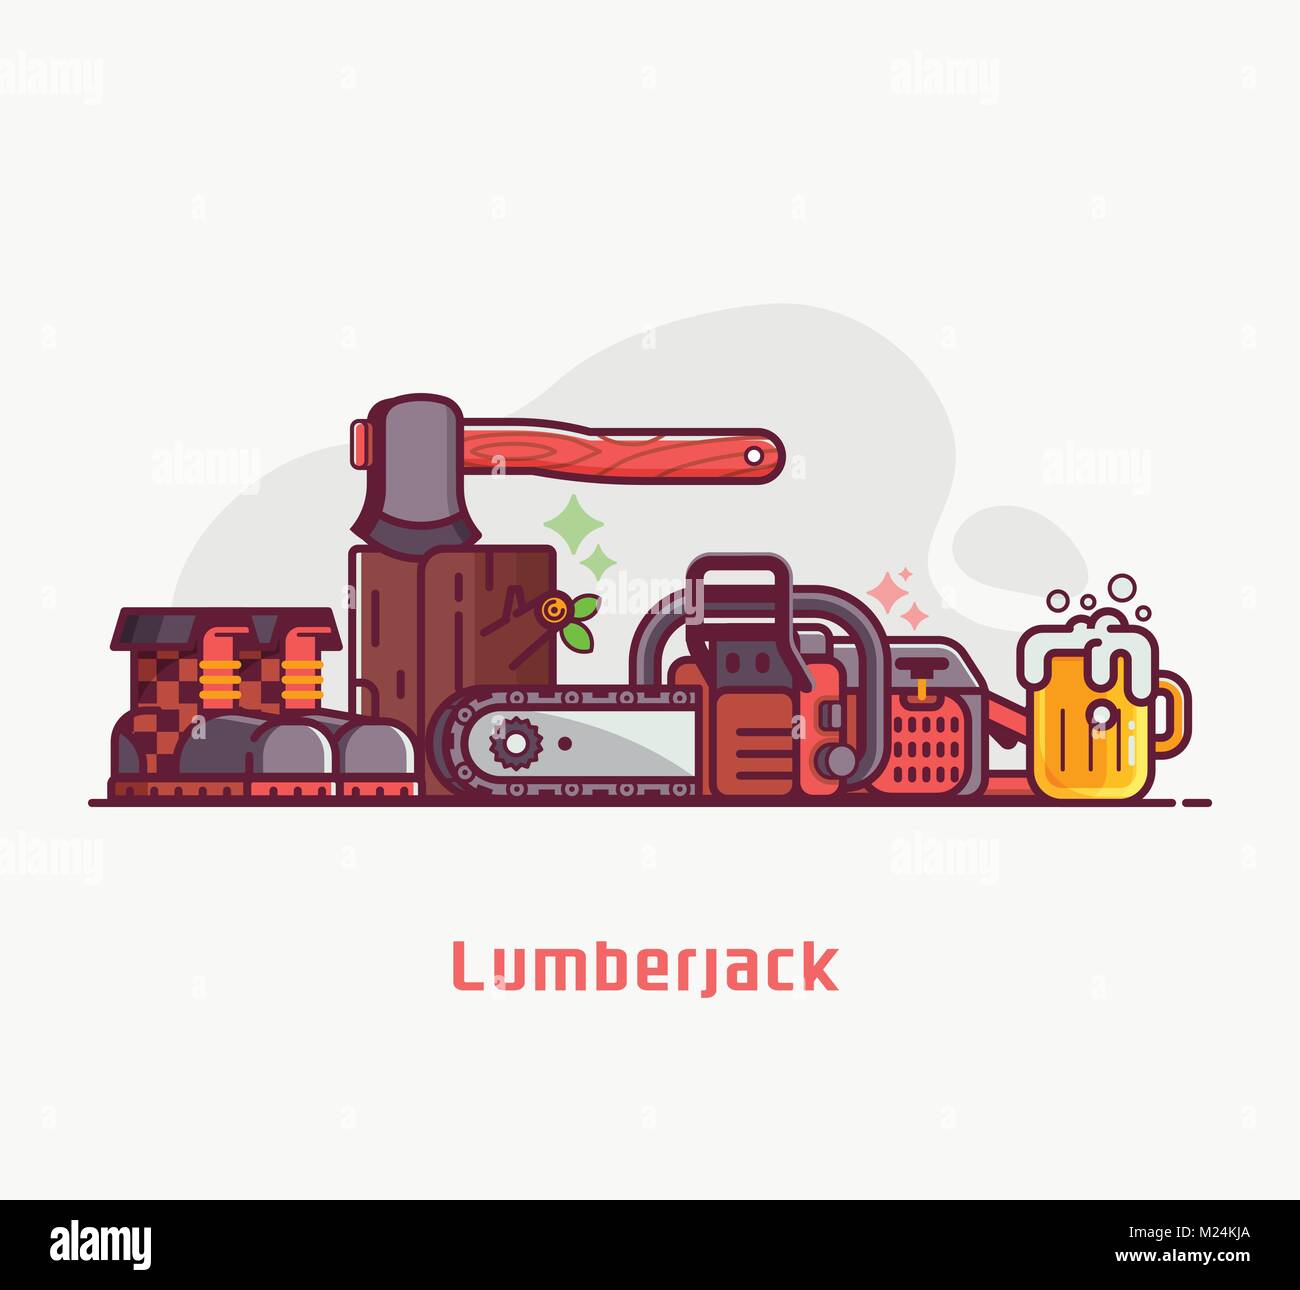 Lumberjack Lifestyle Equipment and Tools Stock Vector